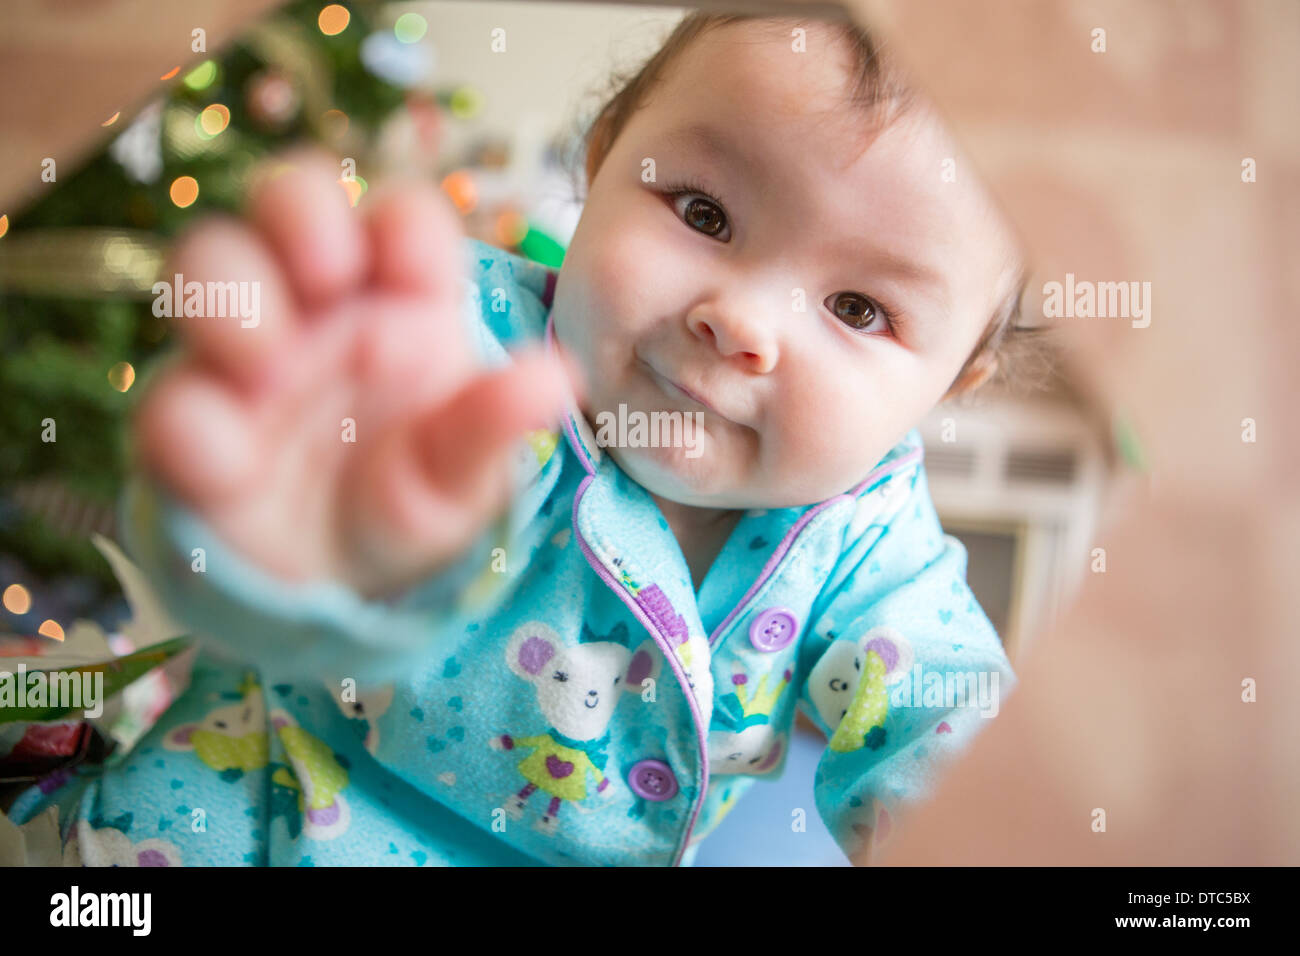 Baby girl wearing pyjamas reaching towards camera Stock Photo